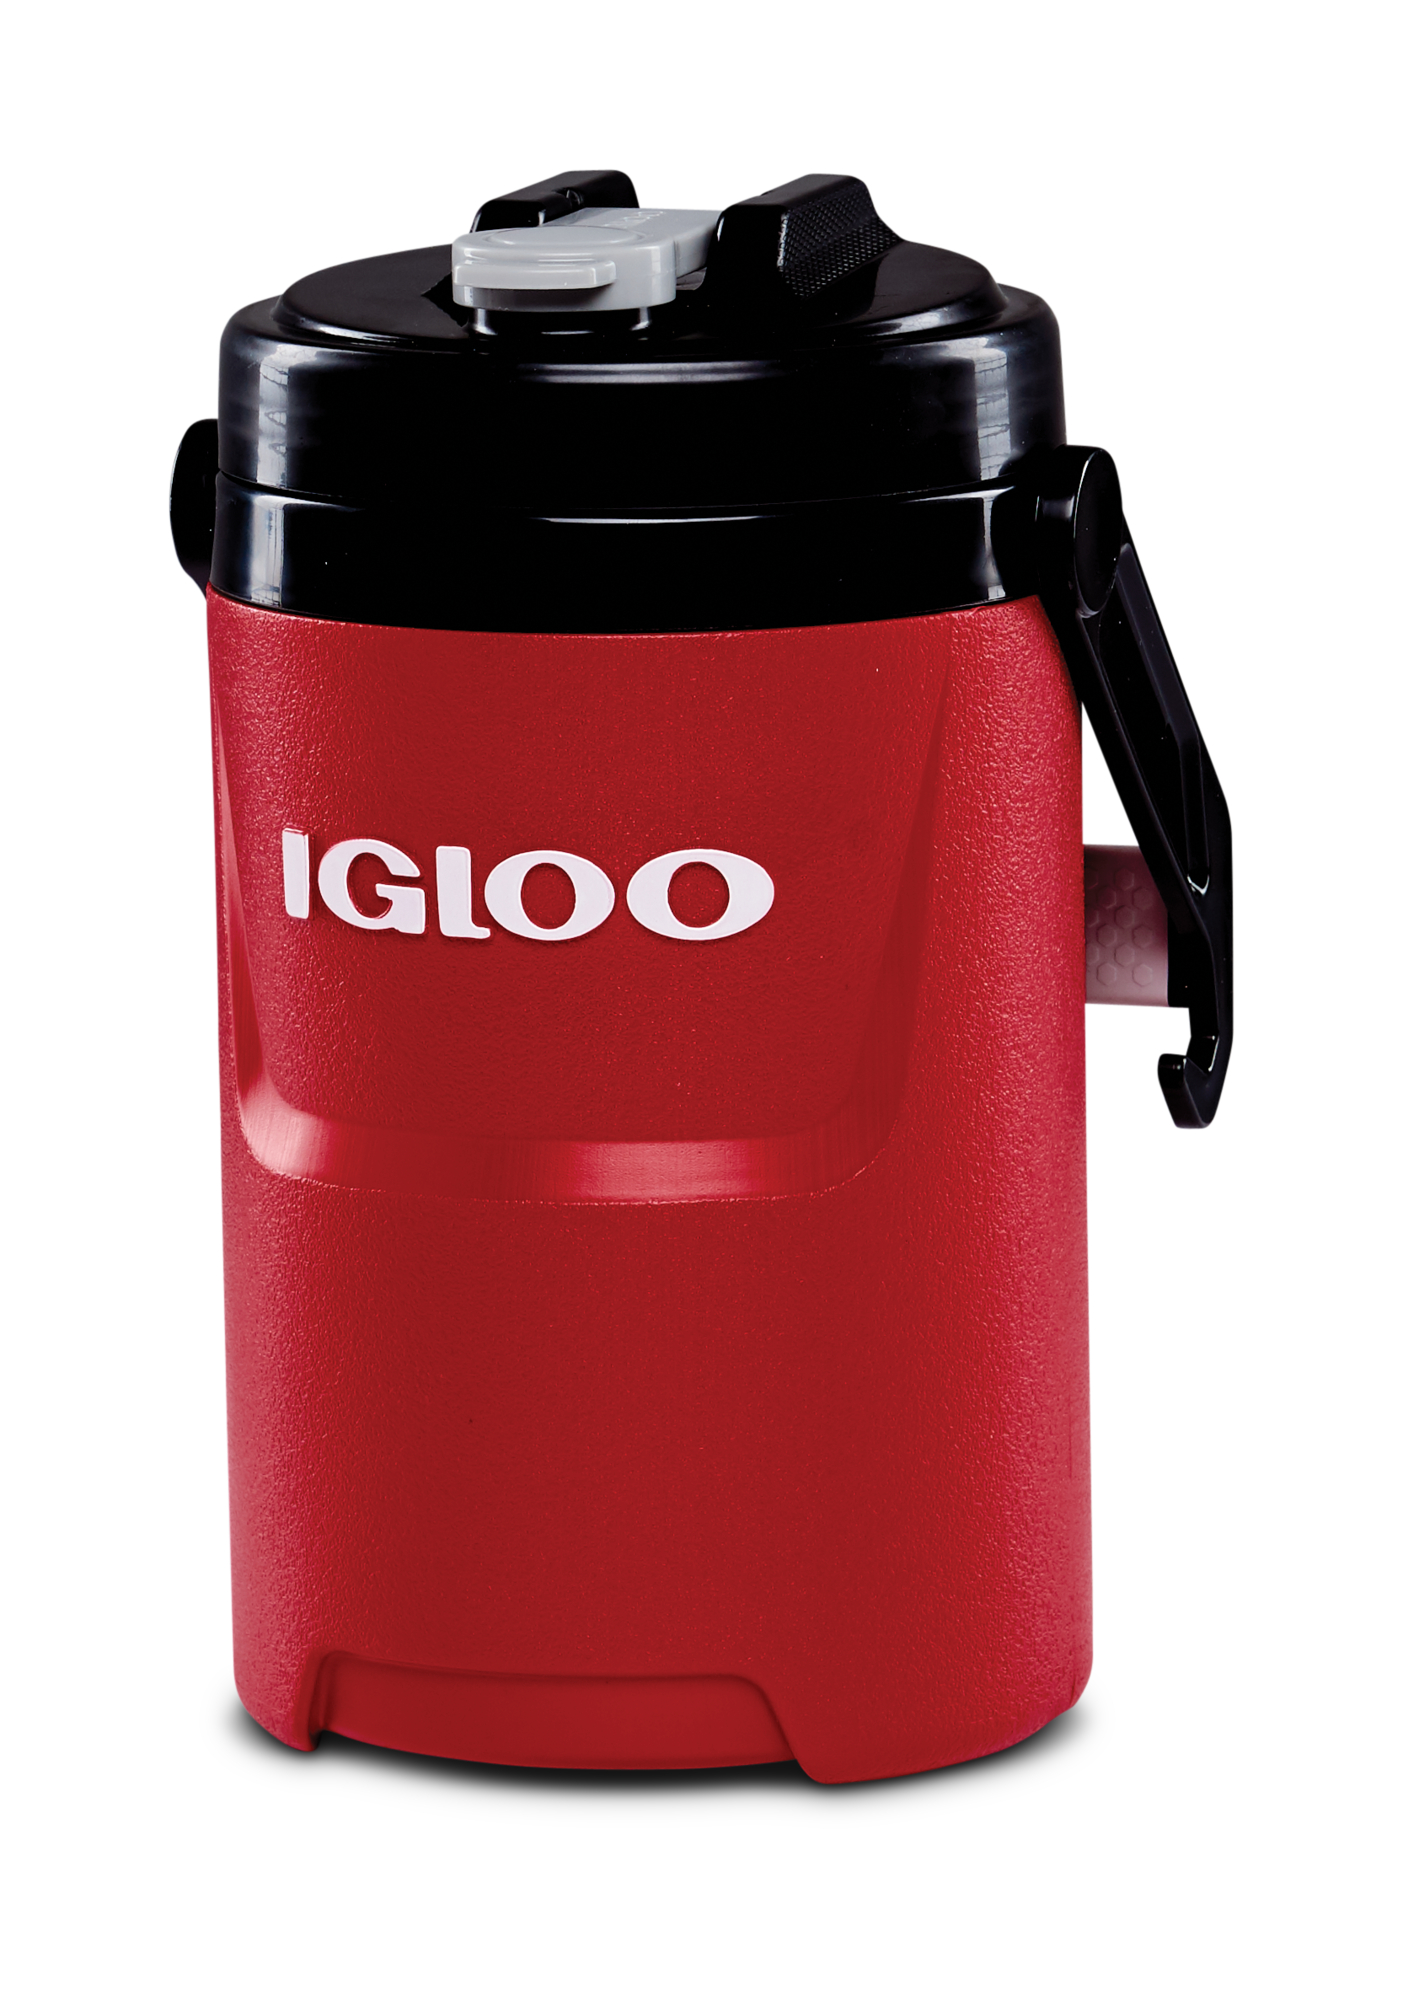 Igloo 1/2-Gallon Laguna Pro Beverage Cooler - Red - image 4 of 6